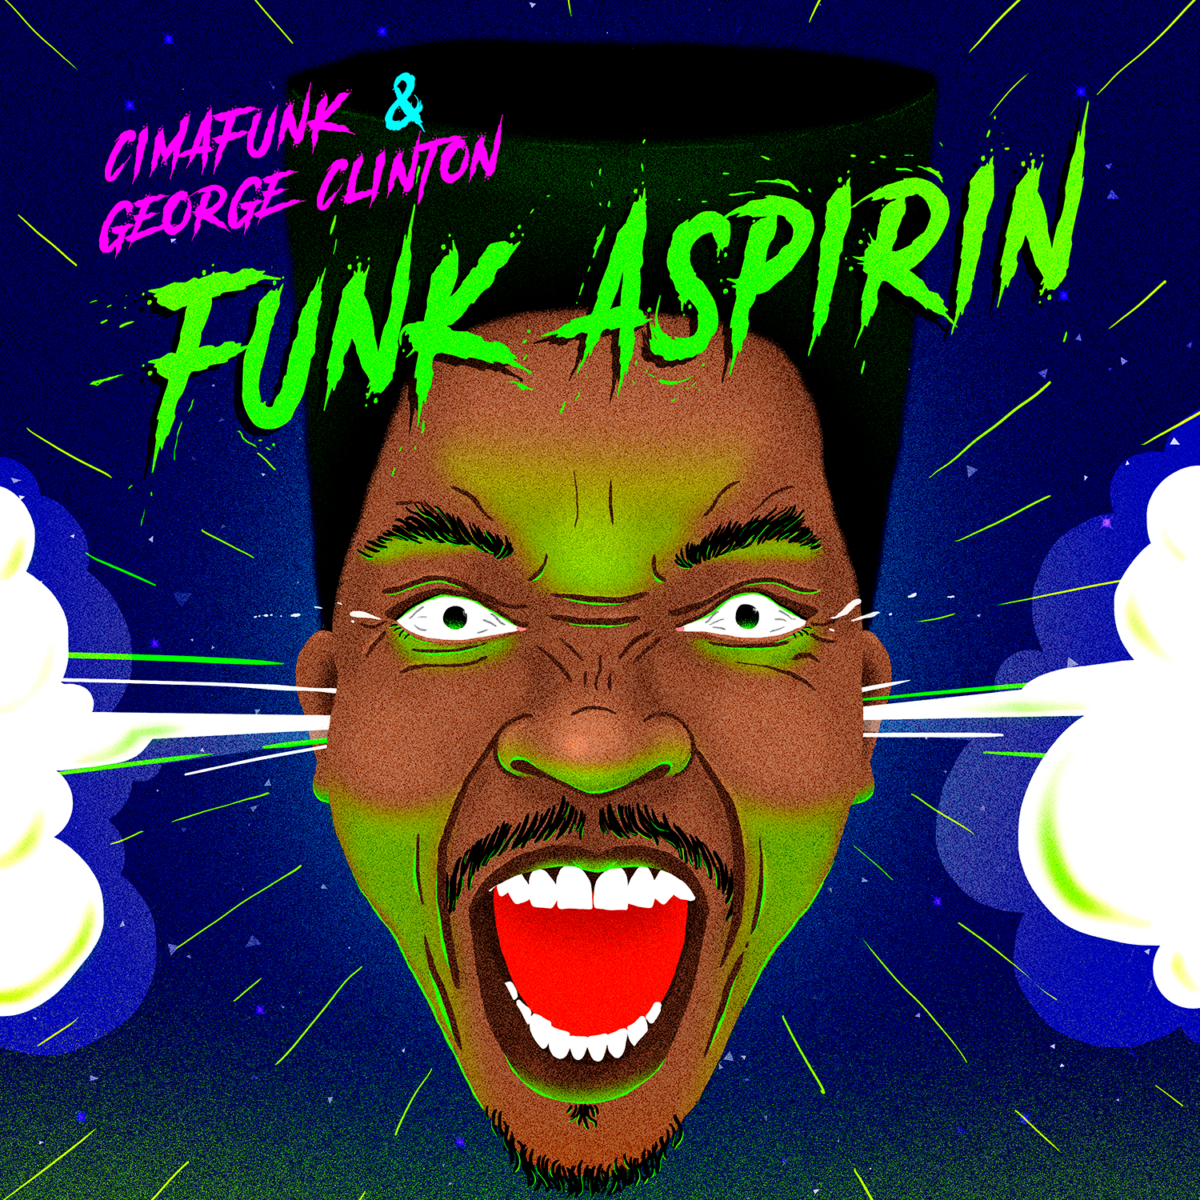 cimafunk y la leyenda del funk george clinton lanzan funk aspirin unnamed 5